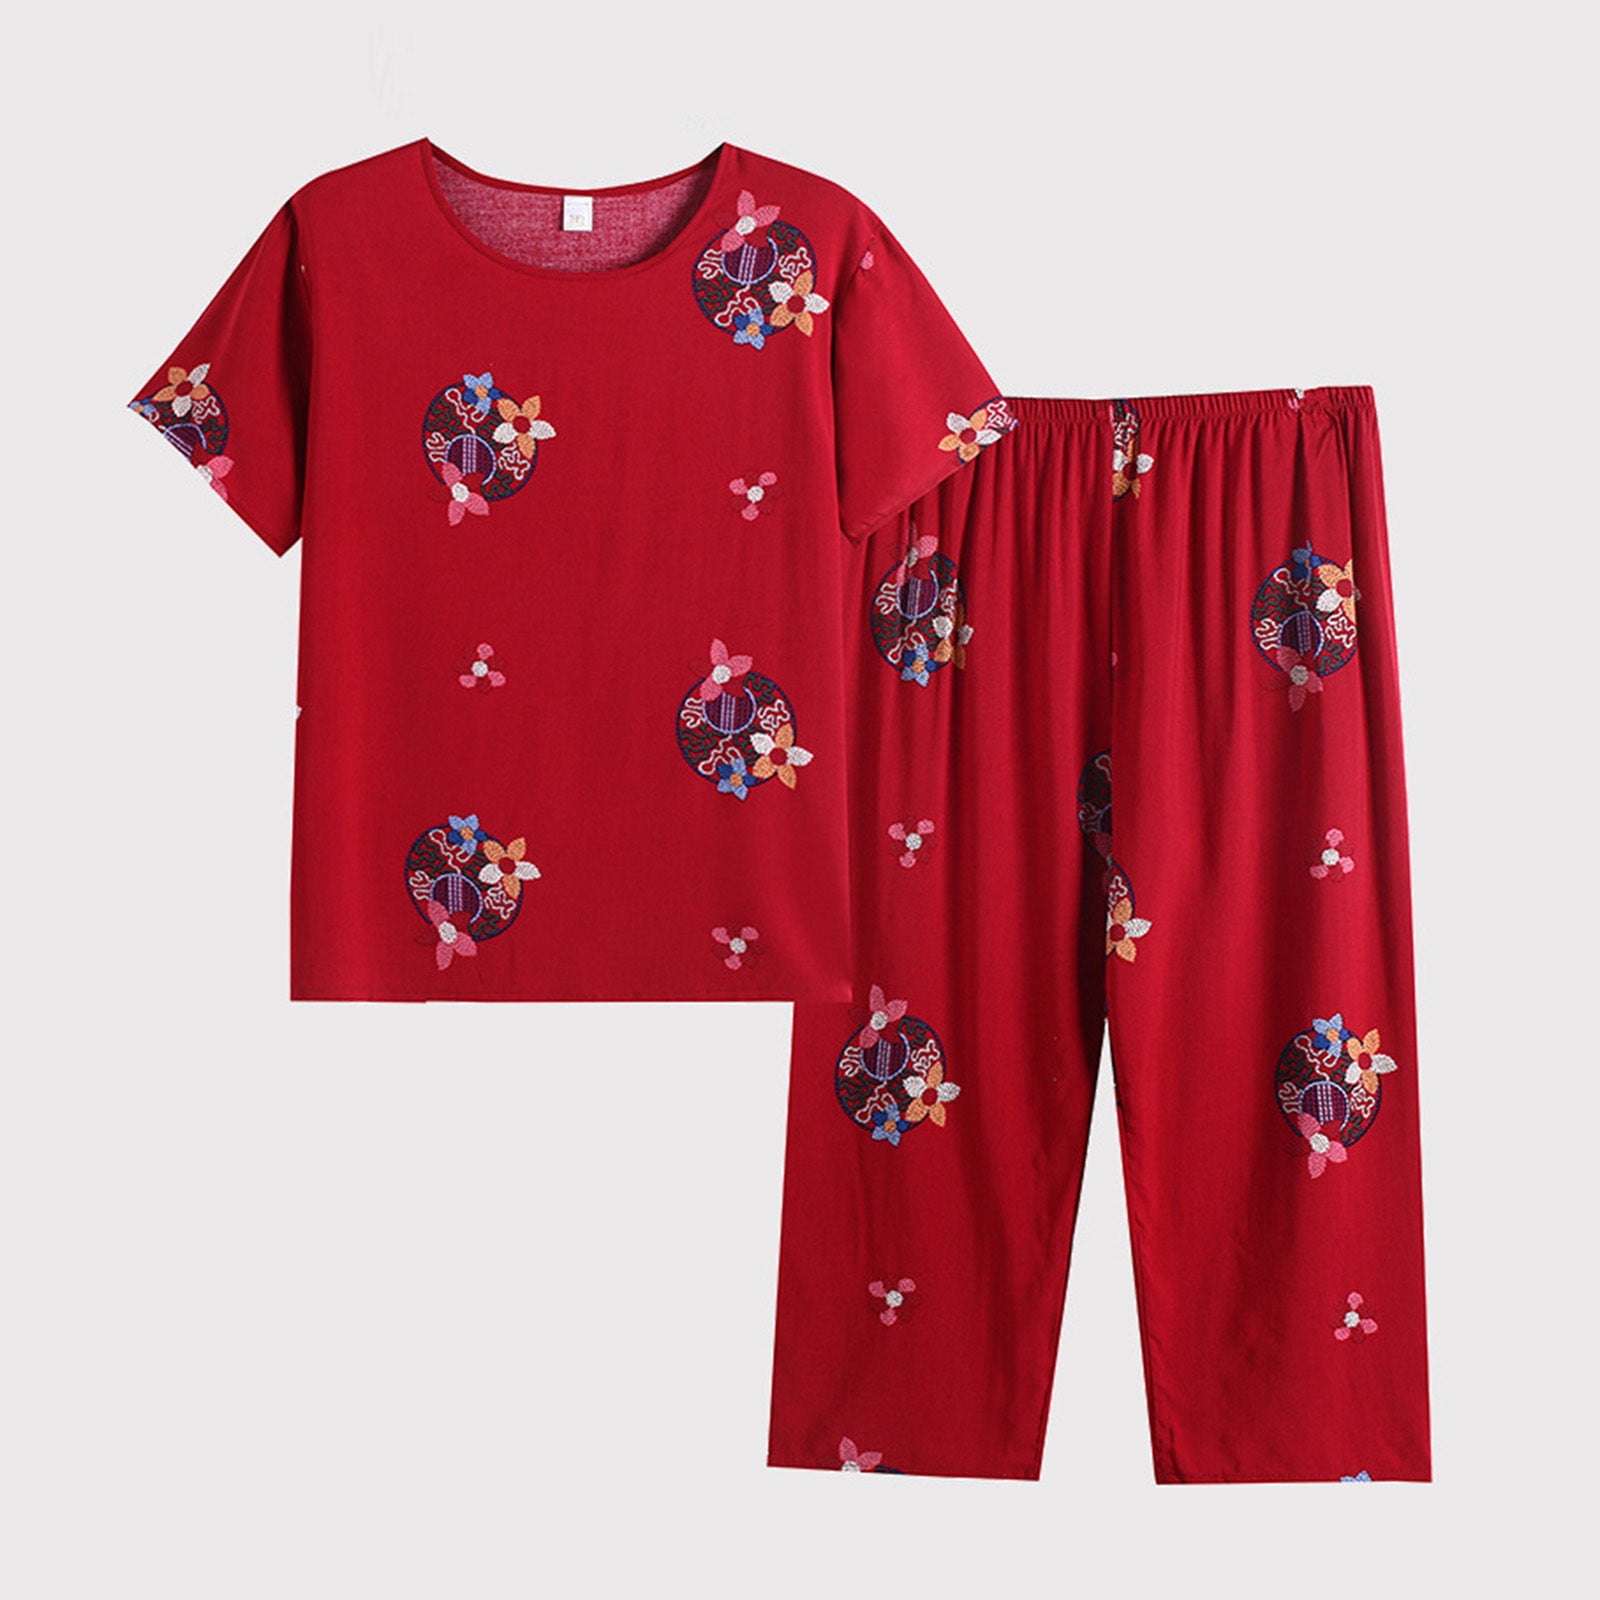 POROPL Women Pajamas Clearance $10.00,Summer Silk Cotton Comfy Plus ...